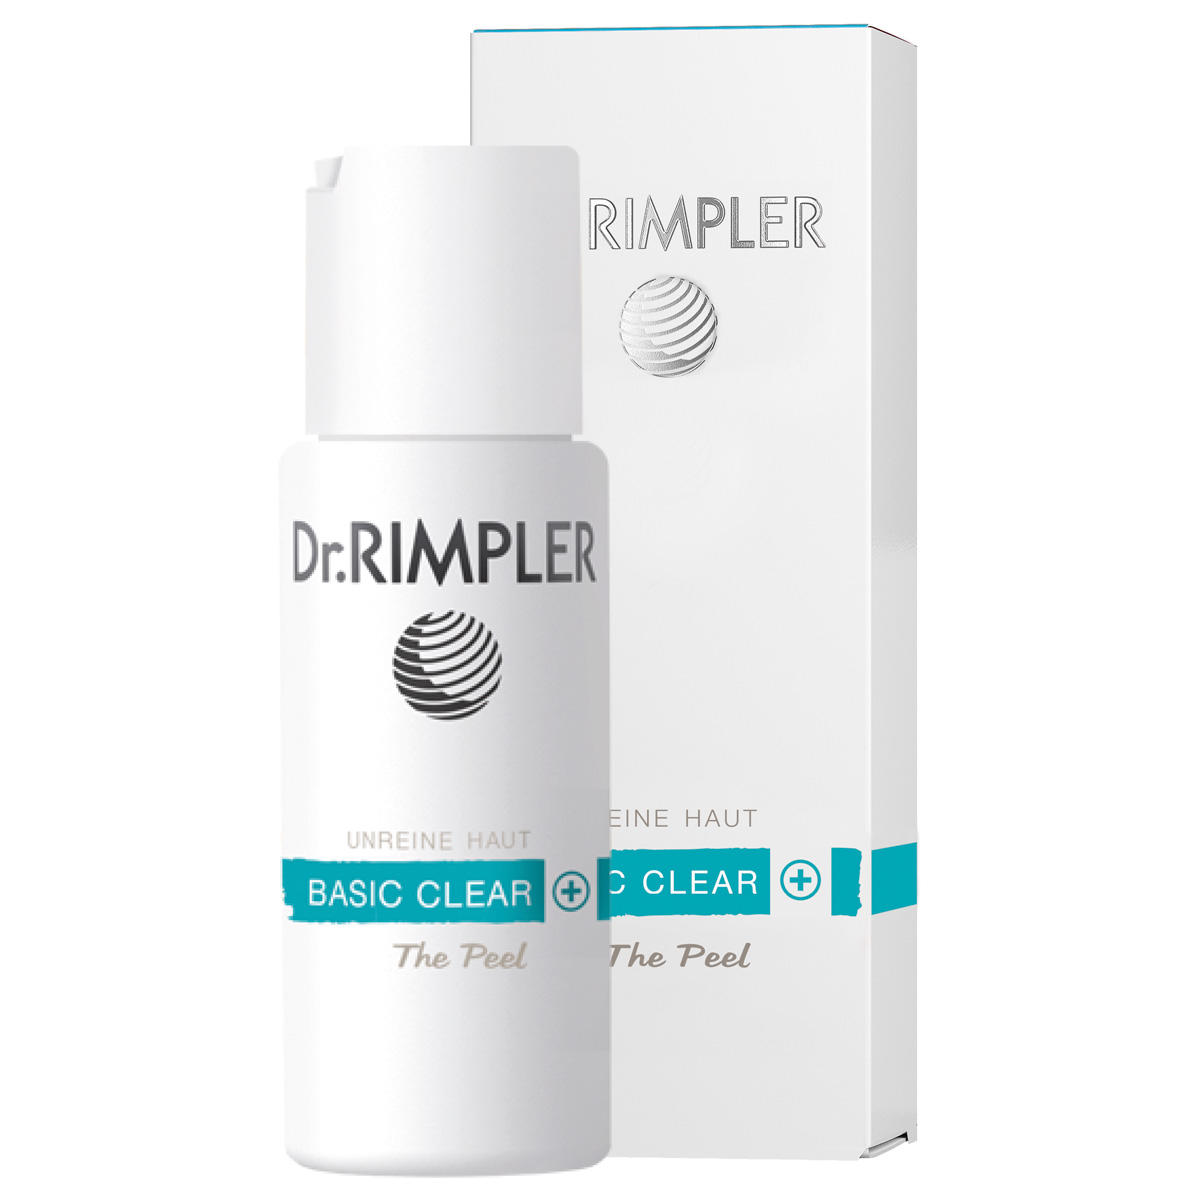 Dr. RIMPLER BASIC CLEAR+ The Peel 15 g - 2